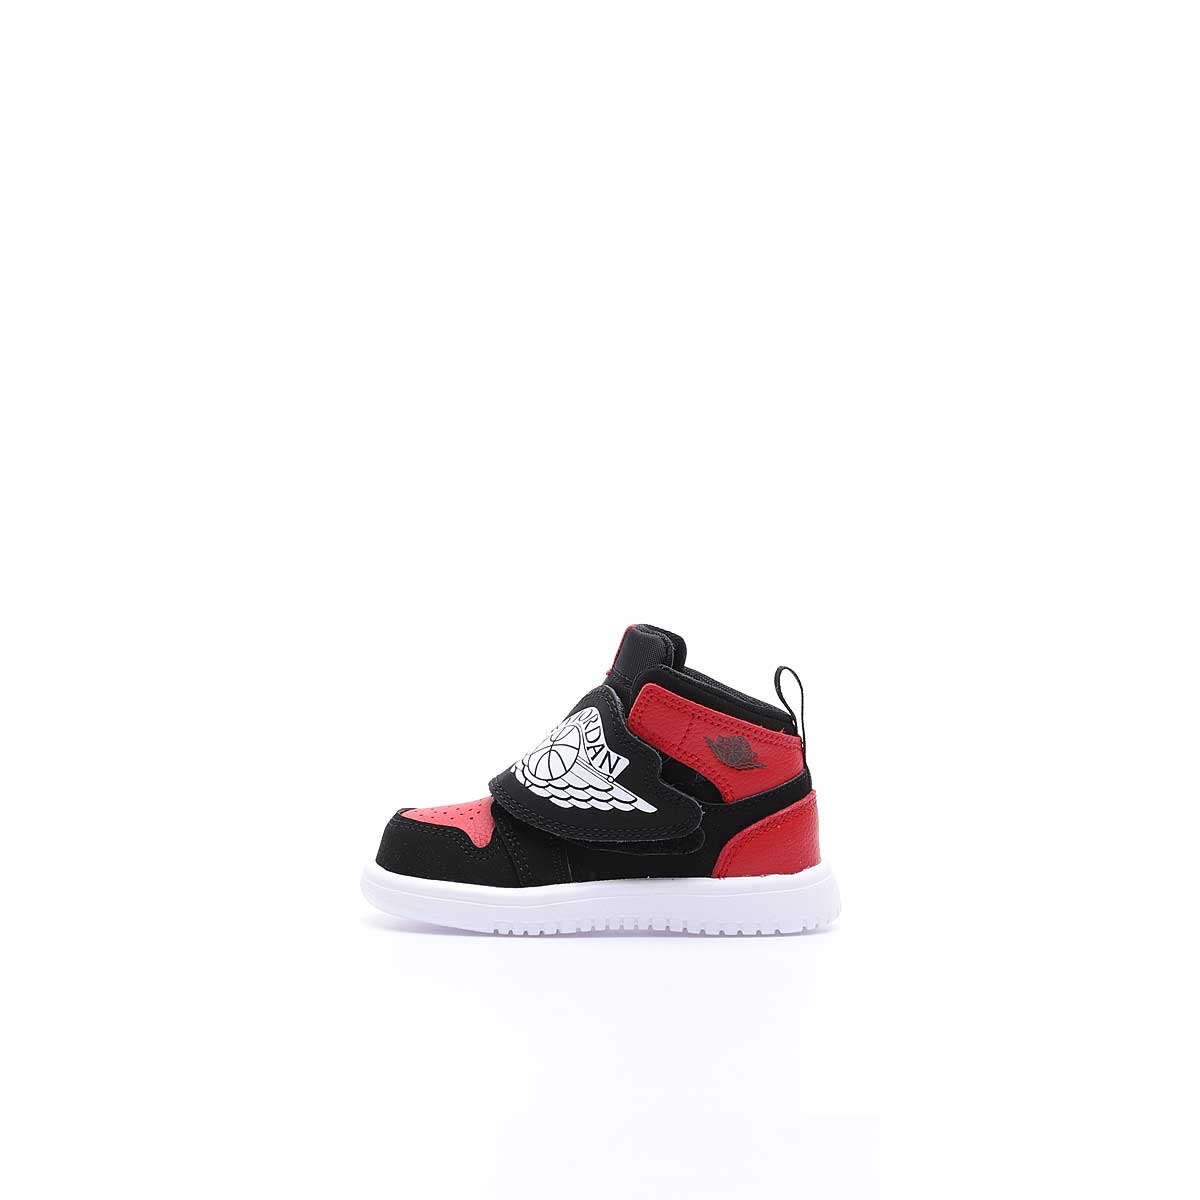 Jordan Sky Jordan 1 (Td), Black/White-Gym Red